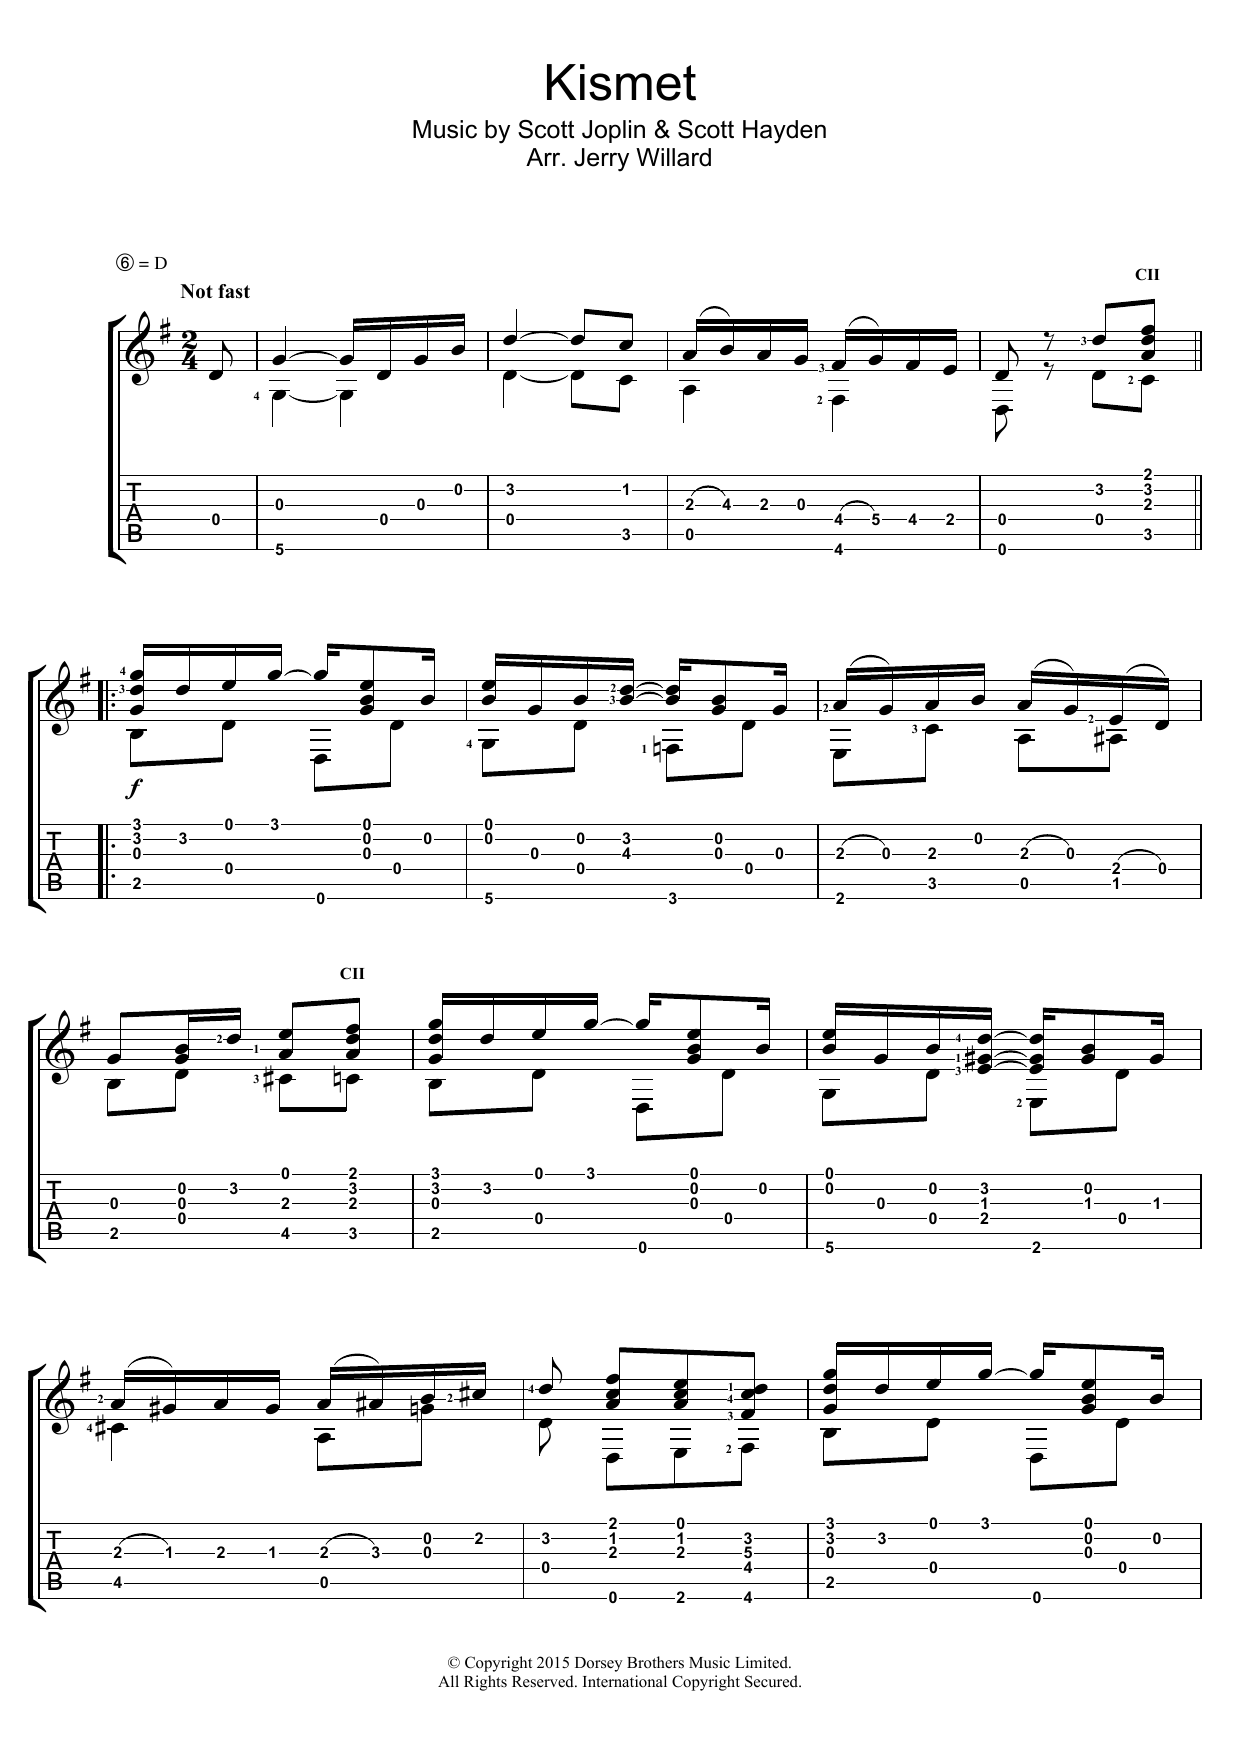 Download Scott Joplin Kismet Sheet Music and learn how to play Guitar Tab PDF digital score in minutes